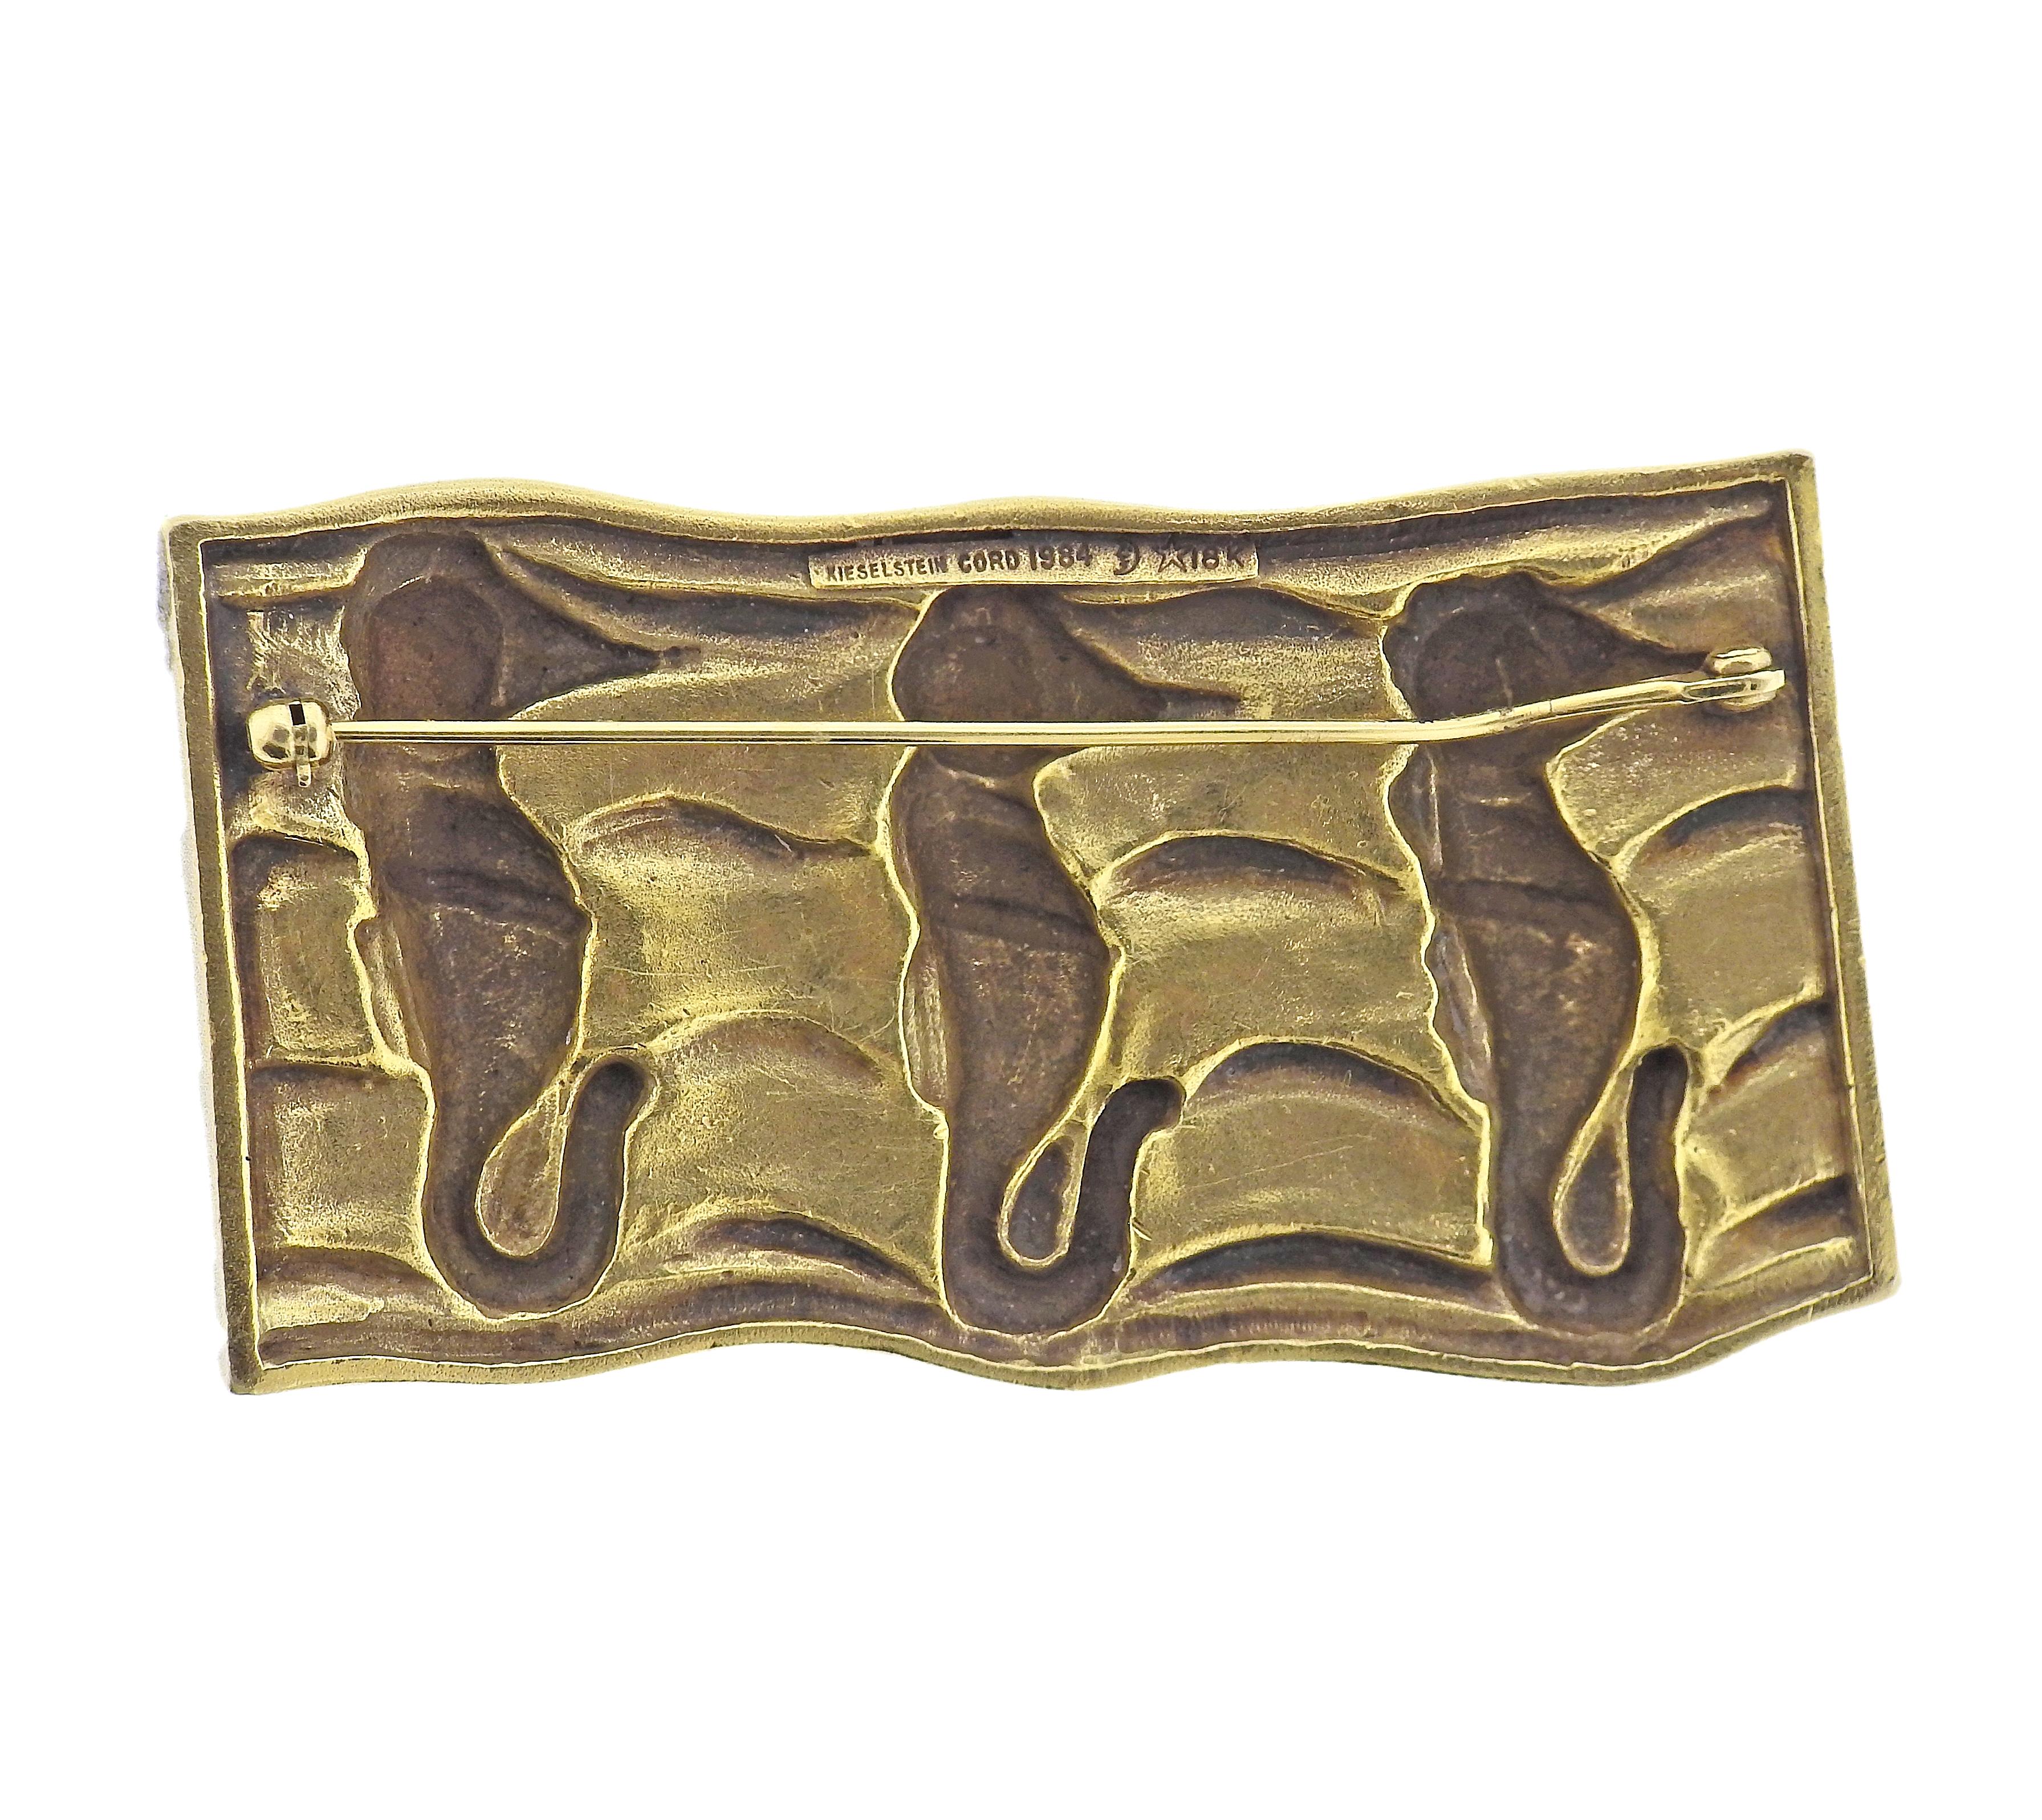 Circa 1984, broche en or 18k de Barry KIESELSTEIN-CORD, représentant trois hippocampes. La broche mesure 2,5